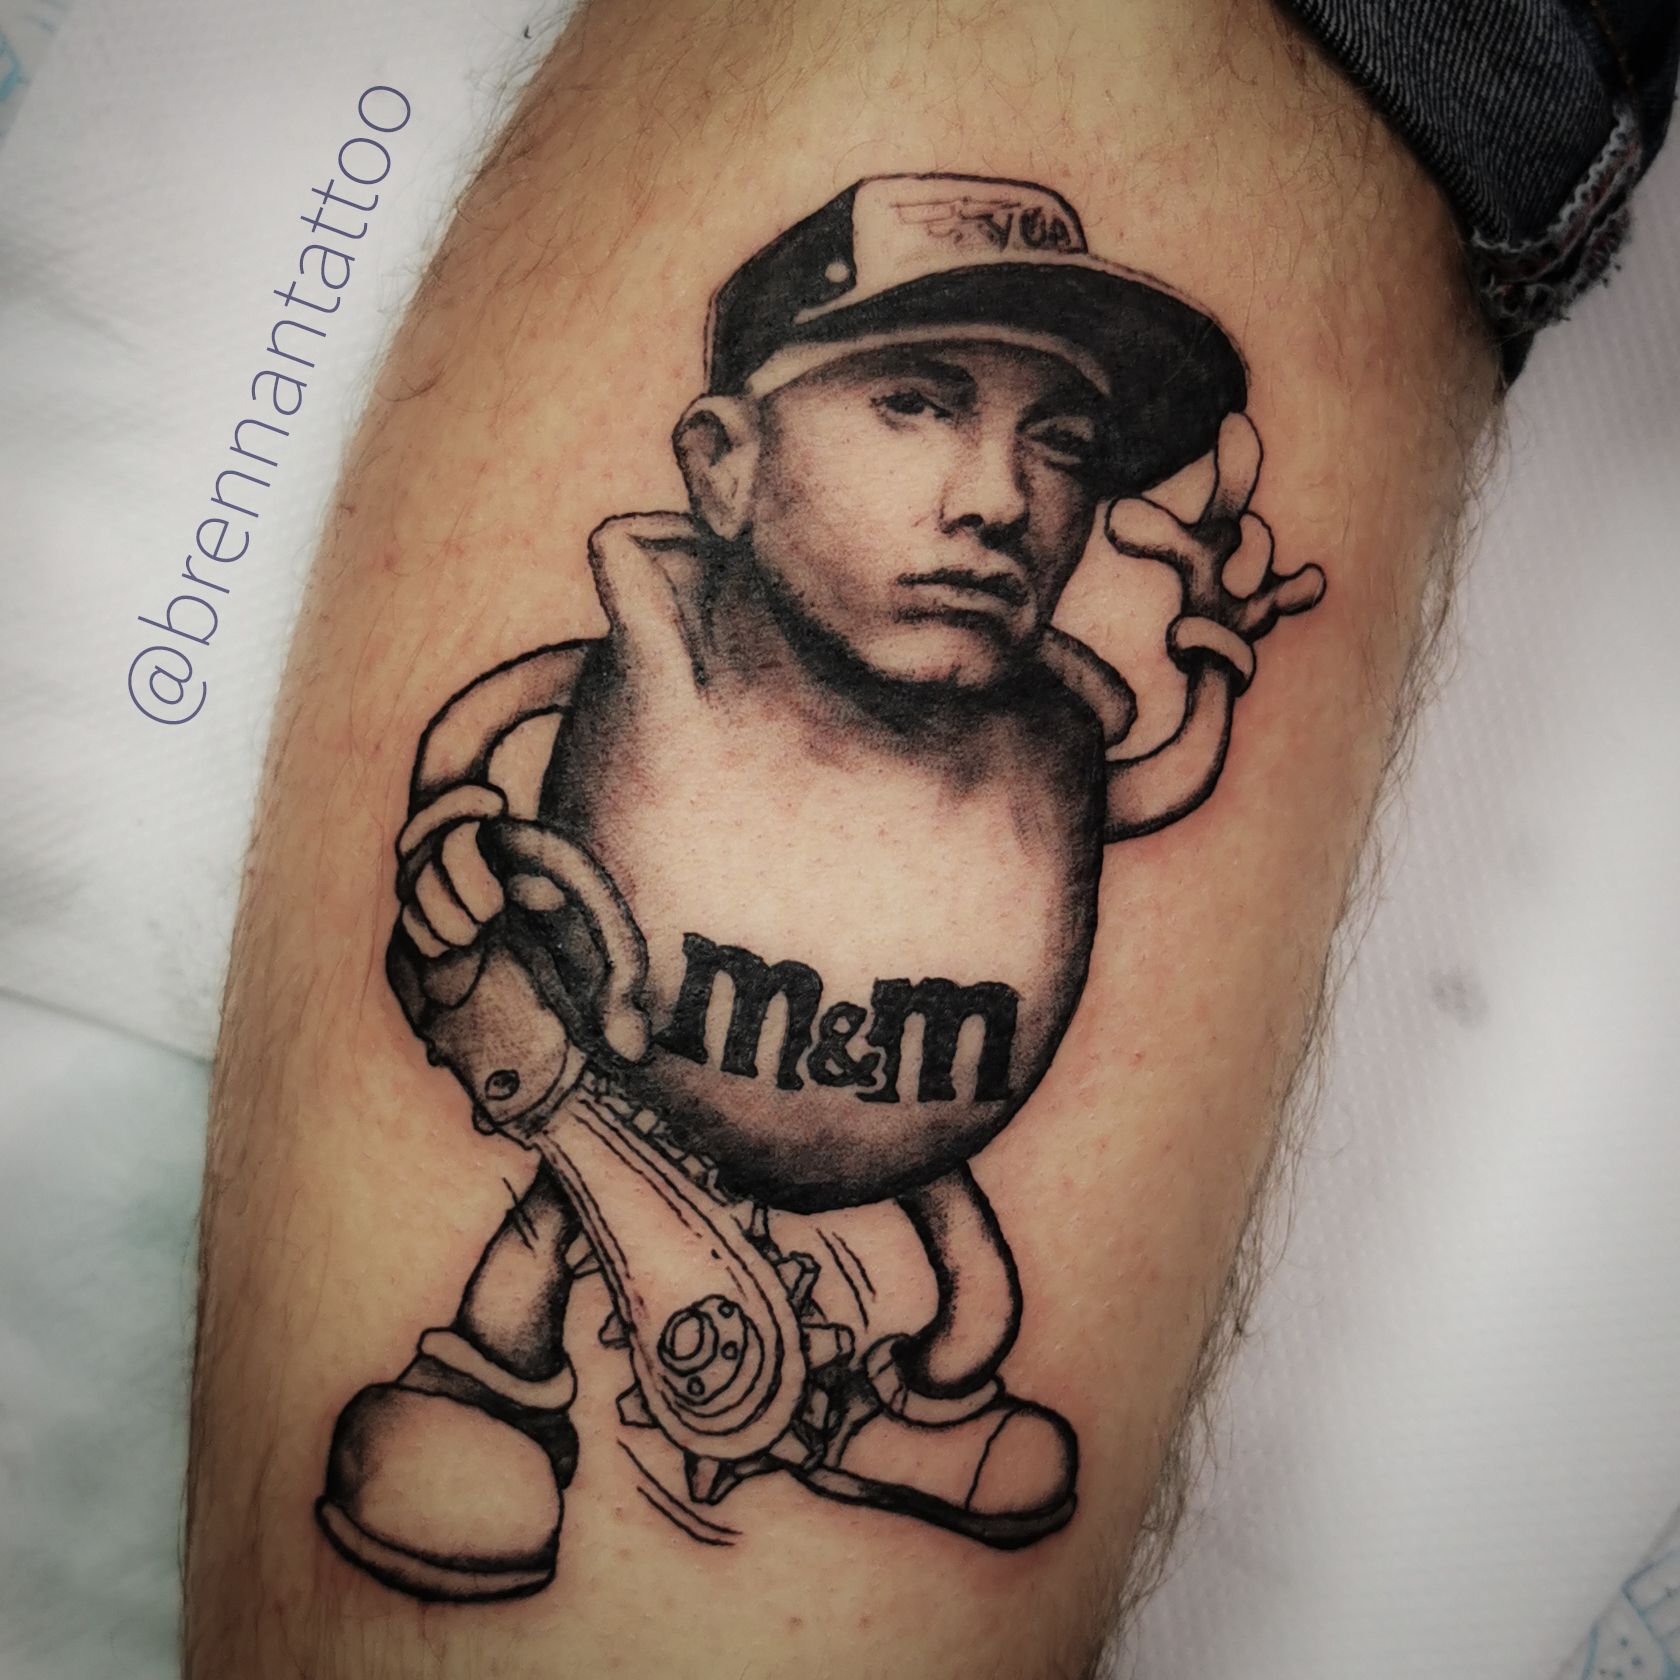 Eminem Temporary Tattoos for Costume - Etsy